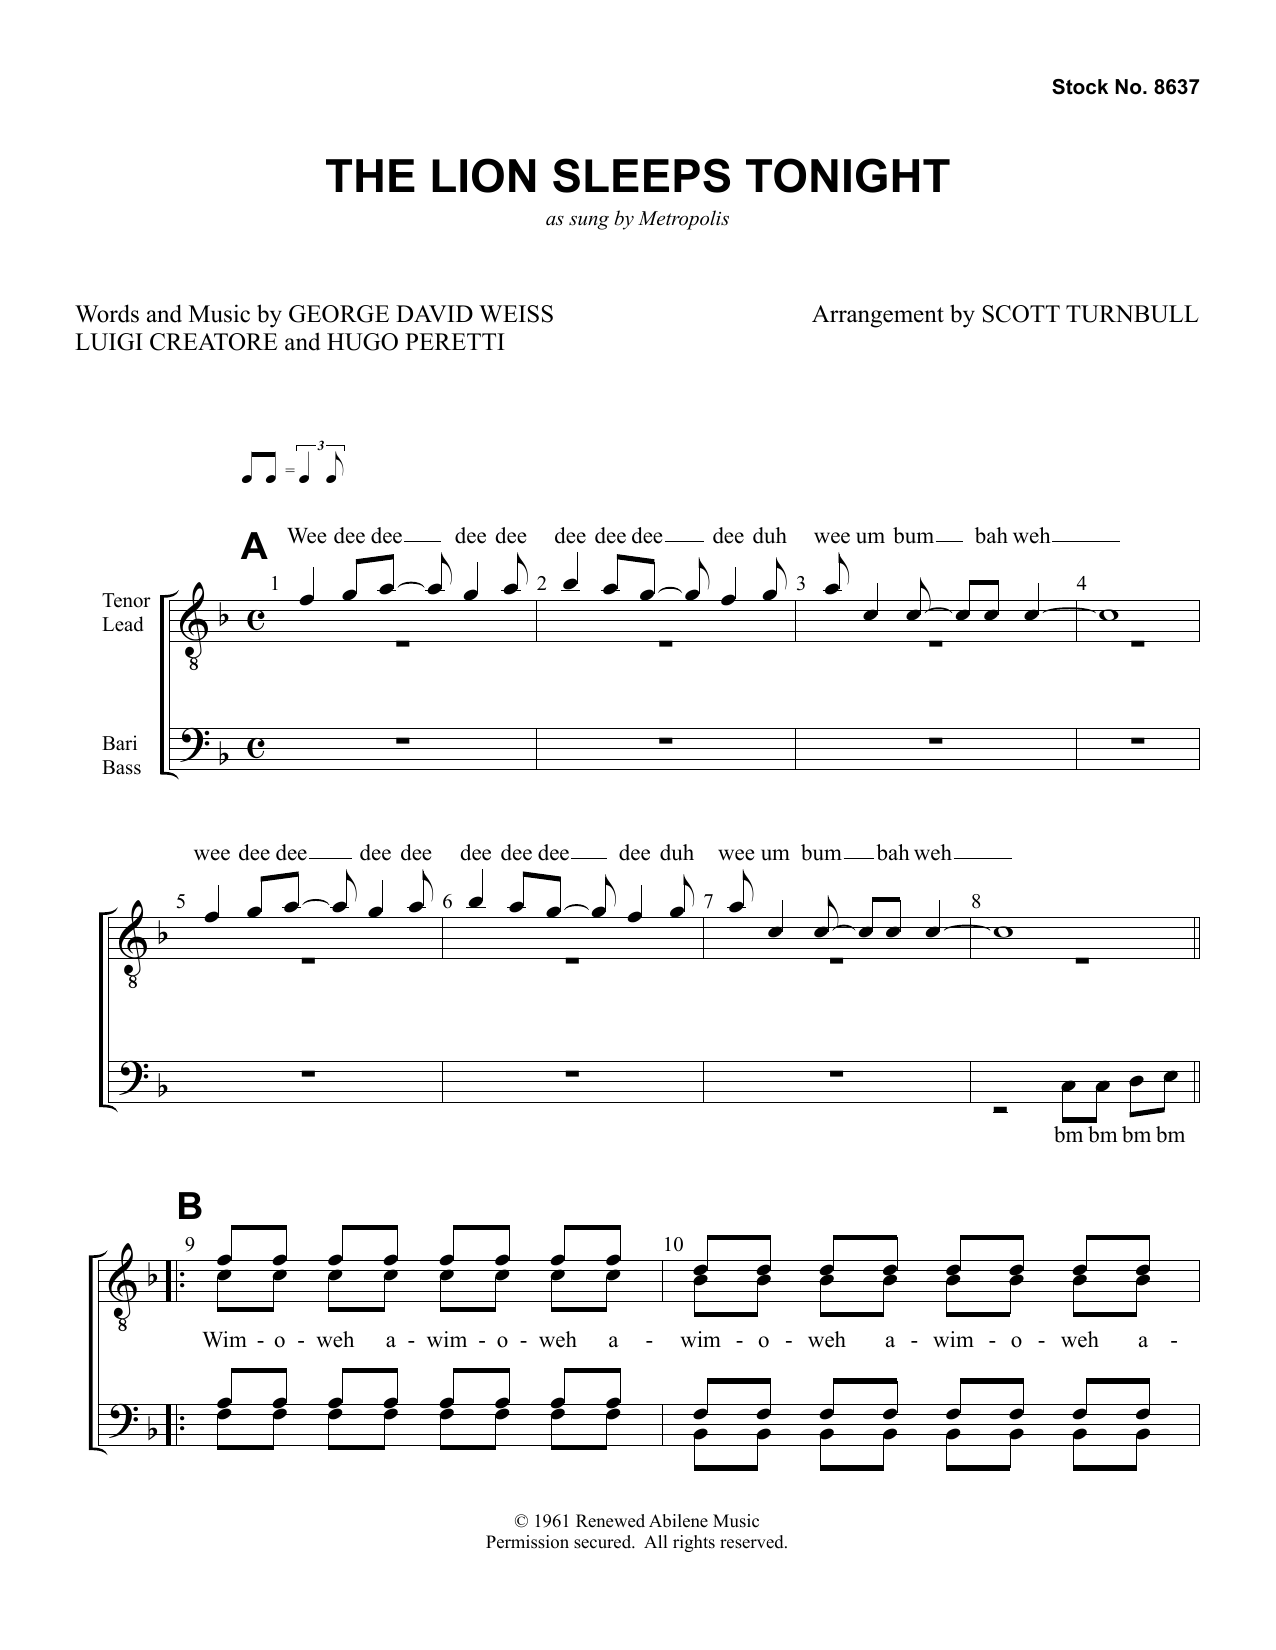 Metropolis The Lion Sleeps Tonight (arr. Scott Turnbull) Sheet Music Notes & Chords for SATB Choir - Download or Print PDF